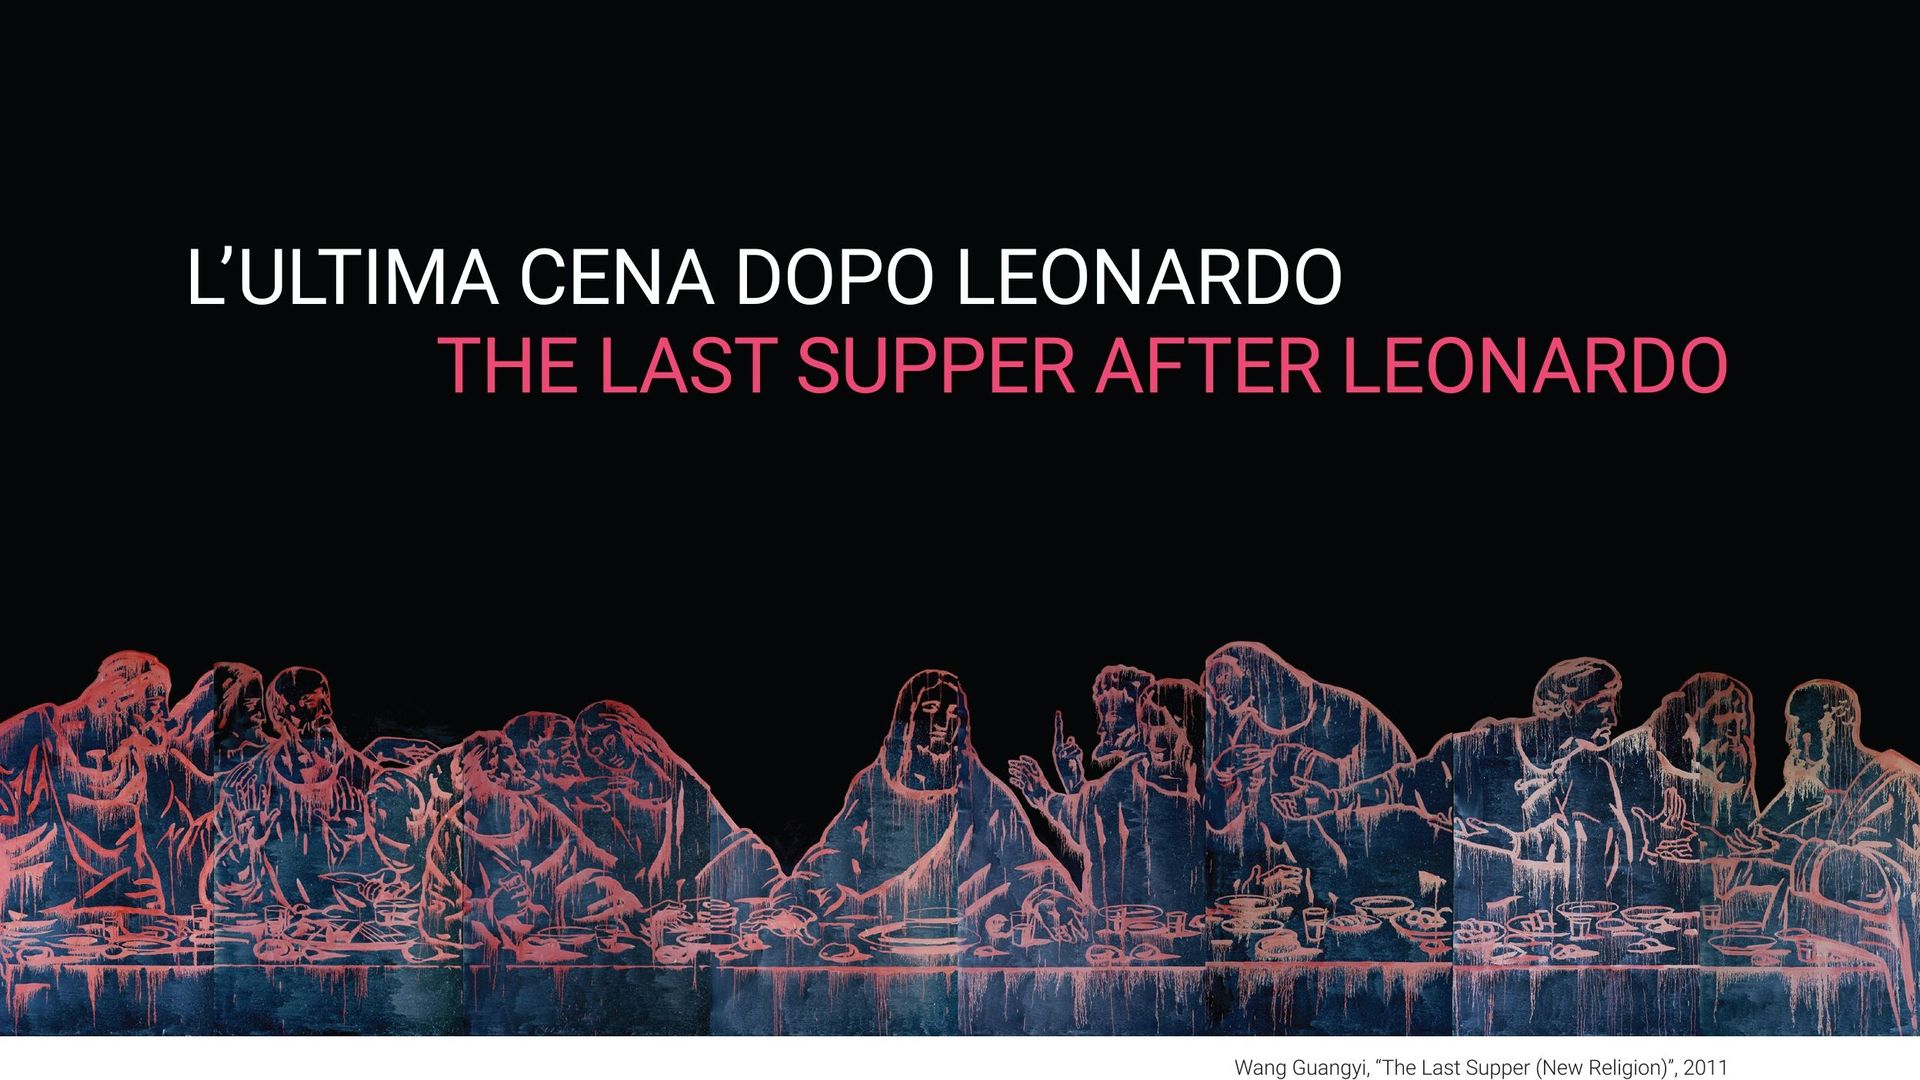 "The Last Supper After Leonardo" du 2 avril au 30 juin 2019 à la Fondazione Stelline à Milan